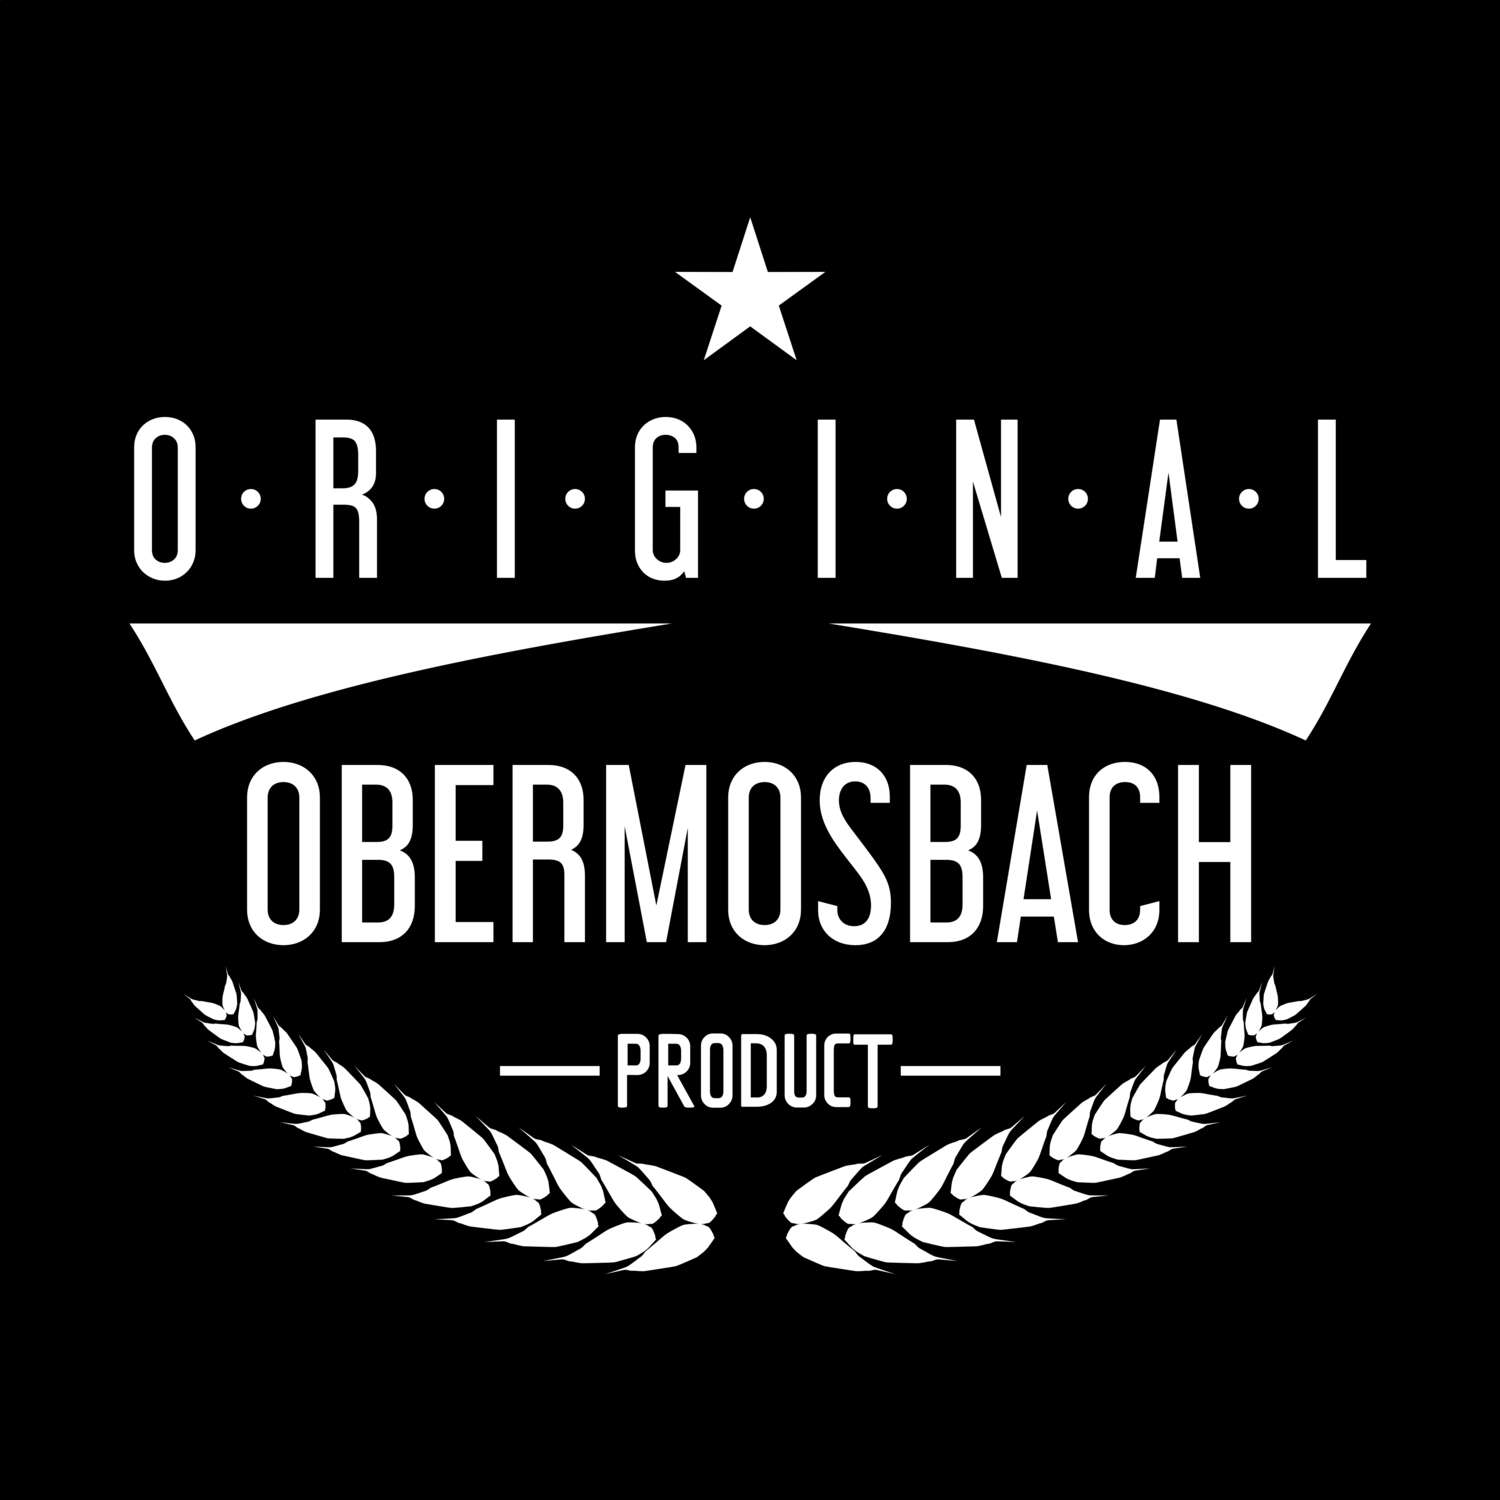 Obermosbach T-Shirt »Original Product«